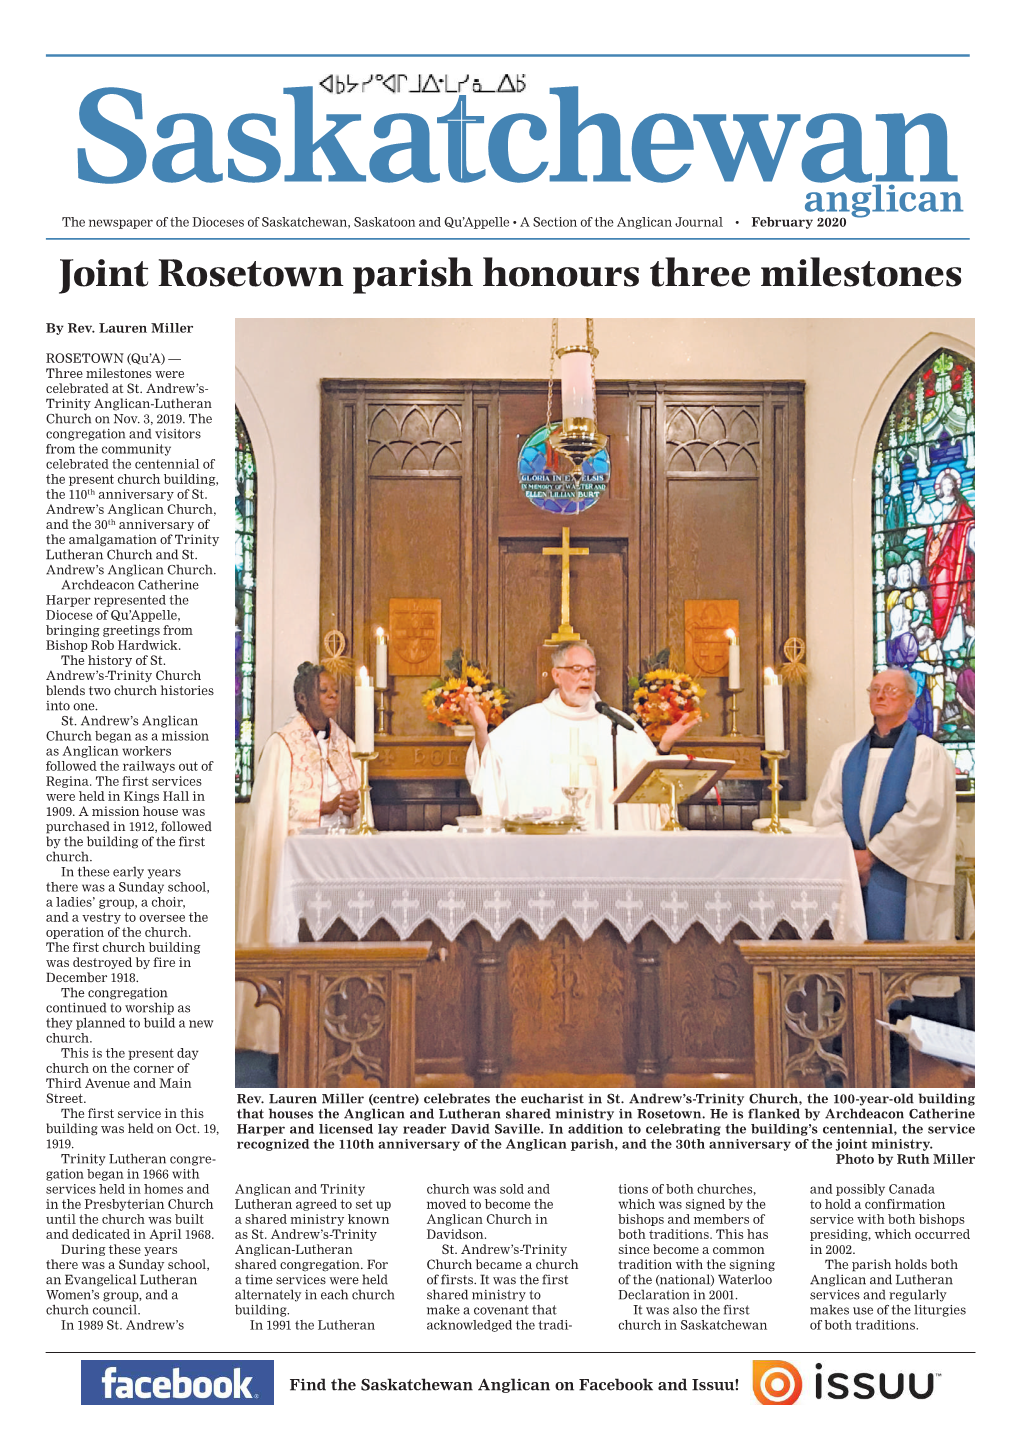 Joint Rosetown Parish Honours Three Milestones